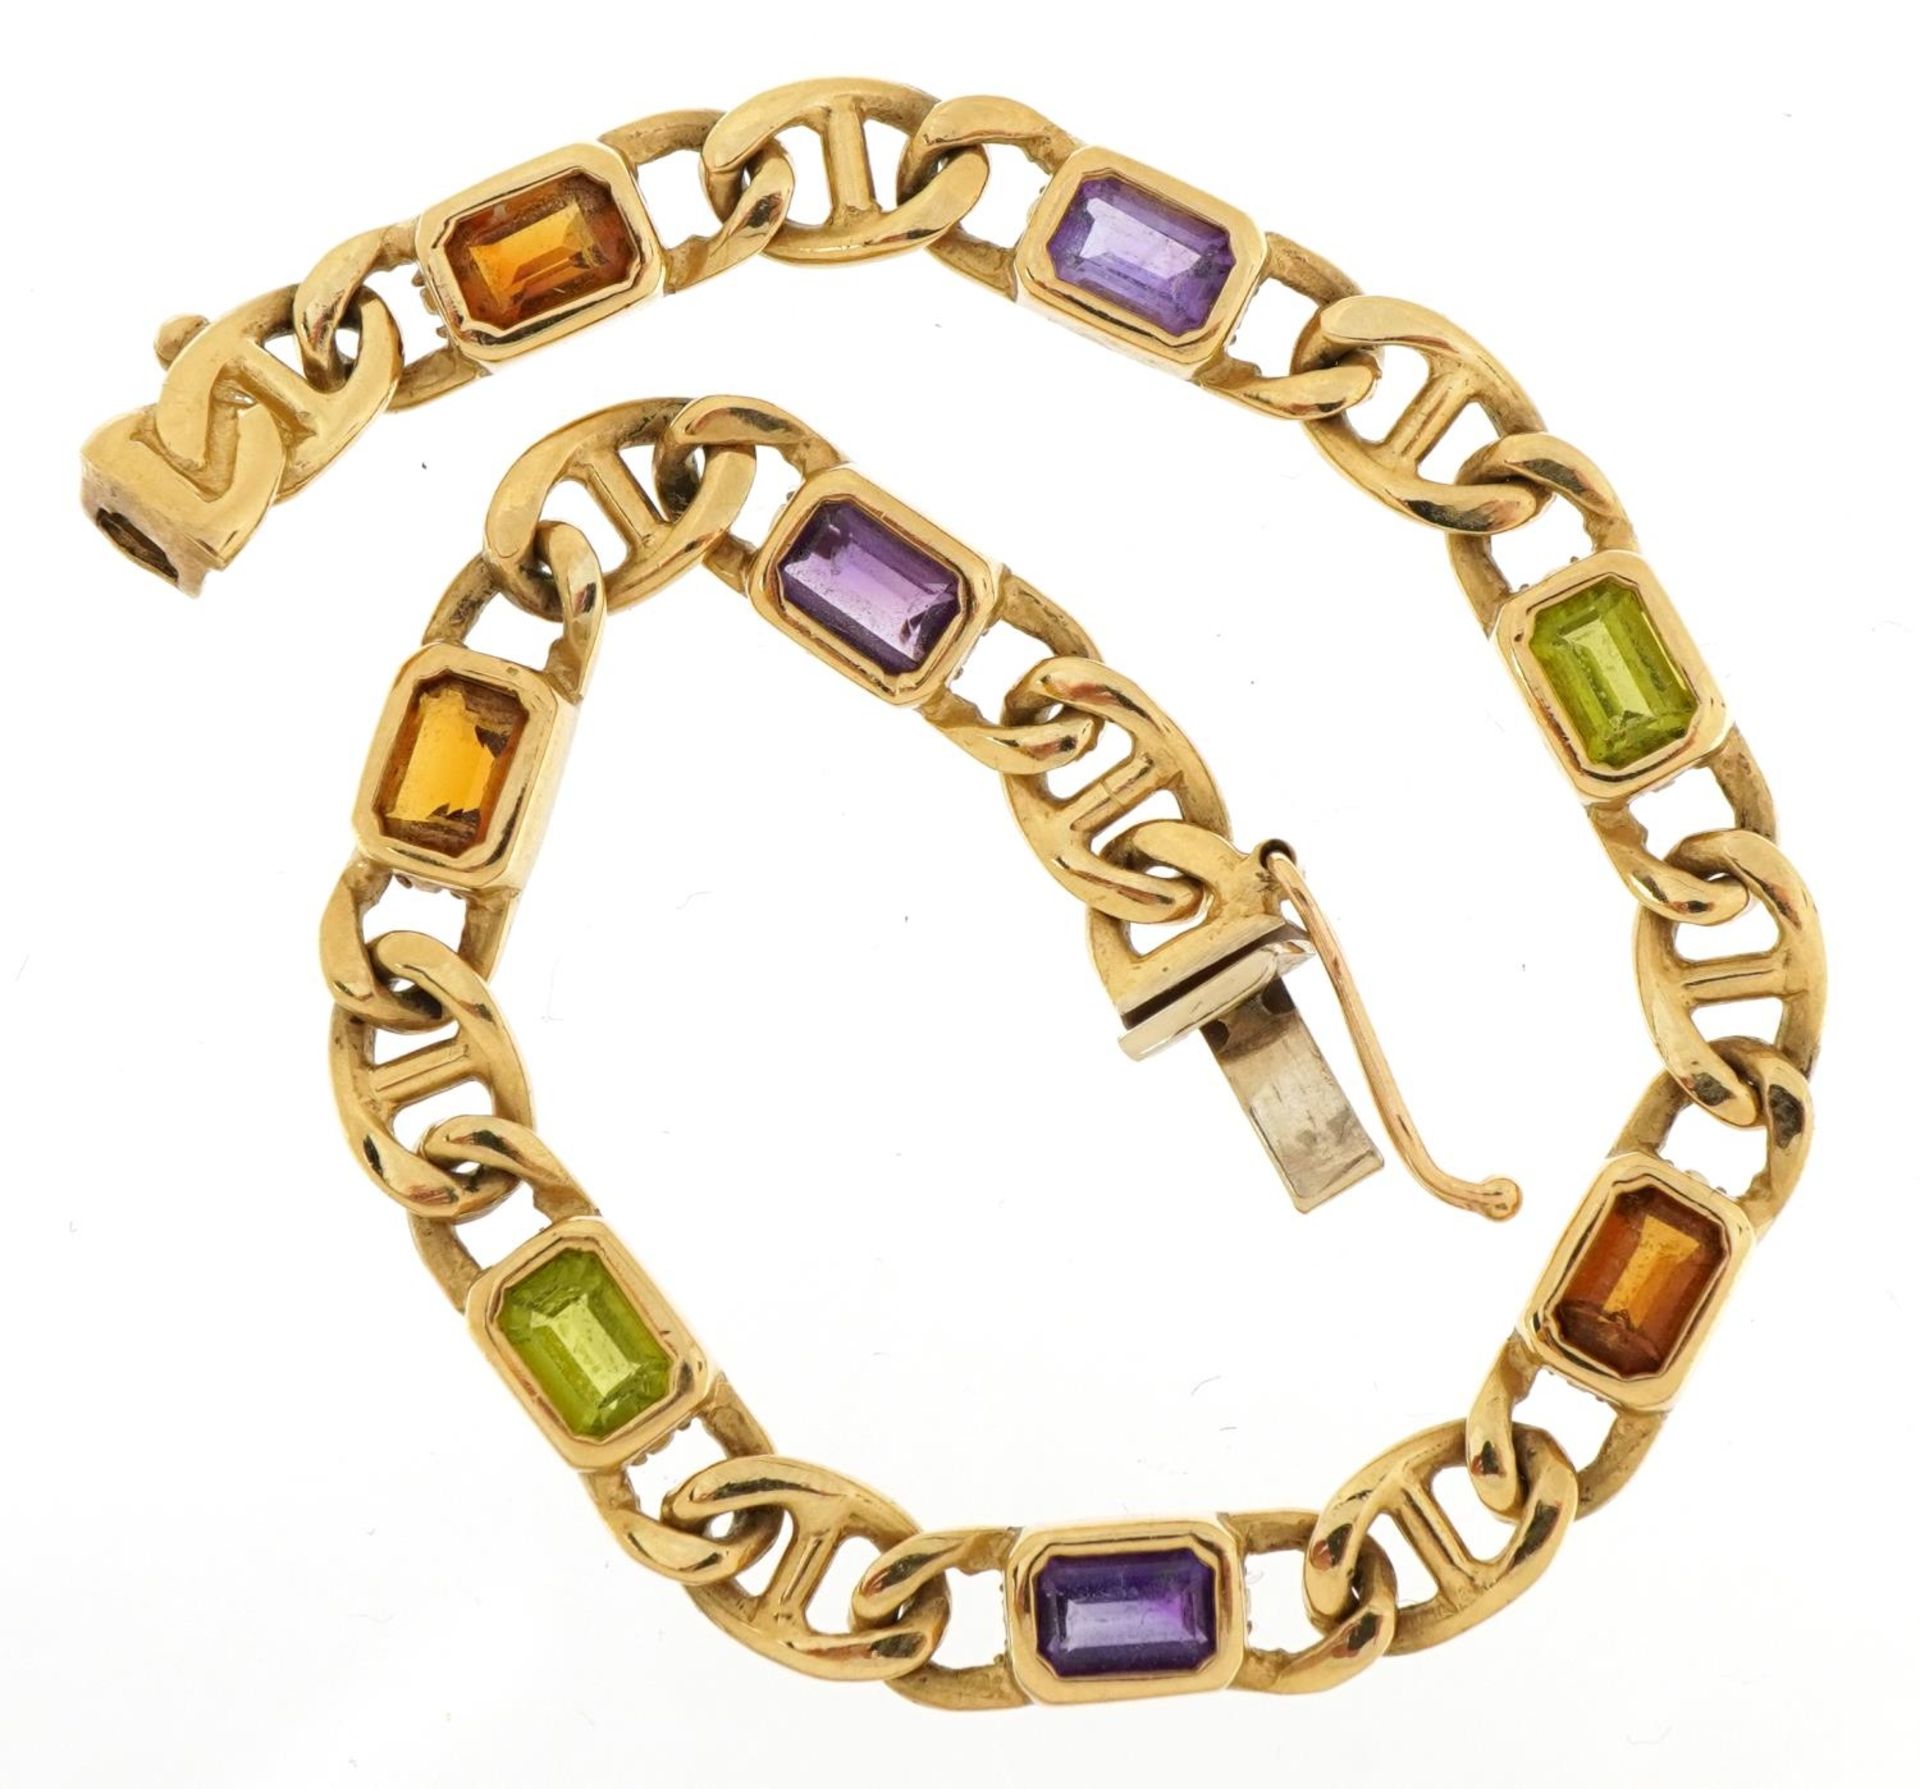 9ct gold curb link design bracelet set with purple, green and orange stones, 17.5cm in length, 12.4g - Bild 2 aus 4